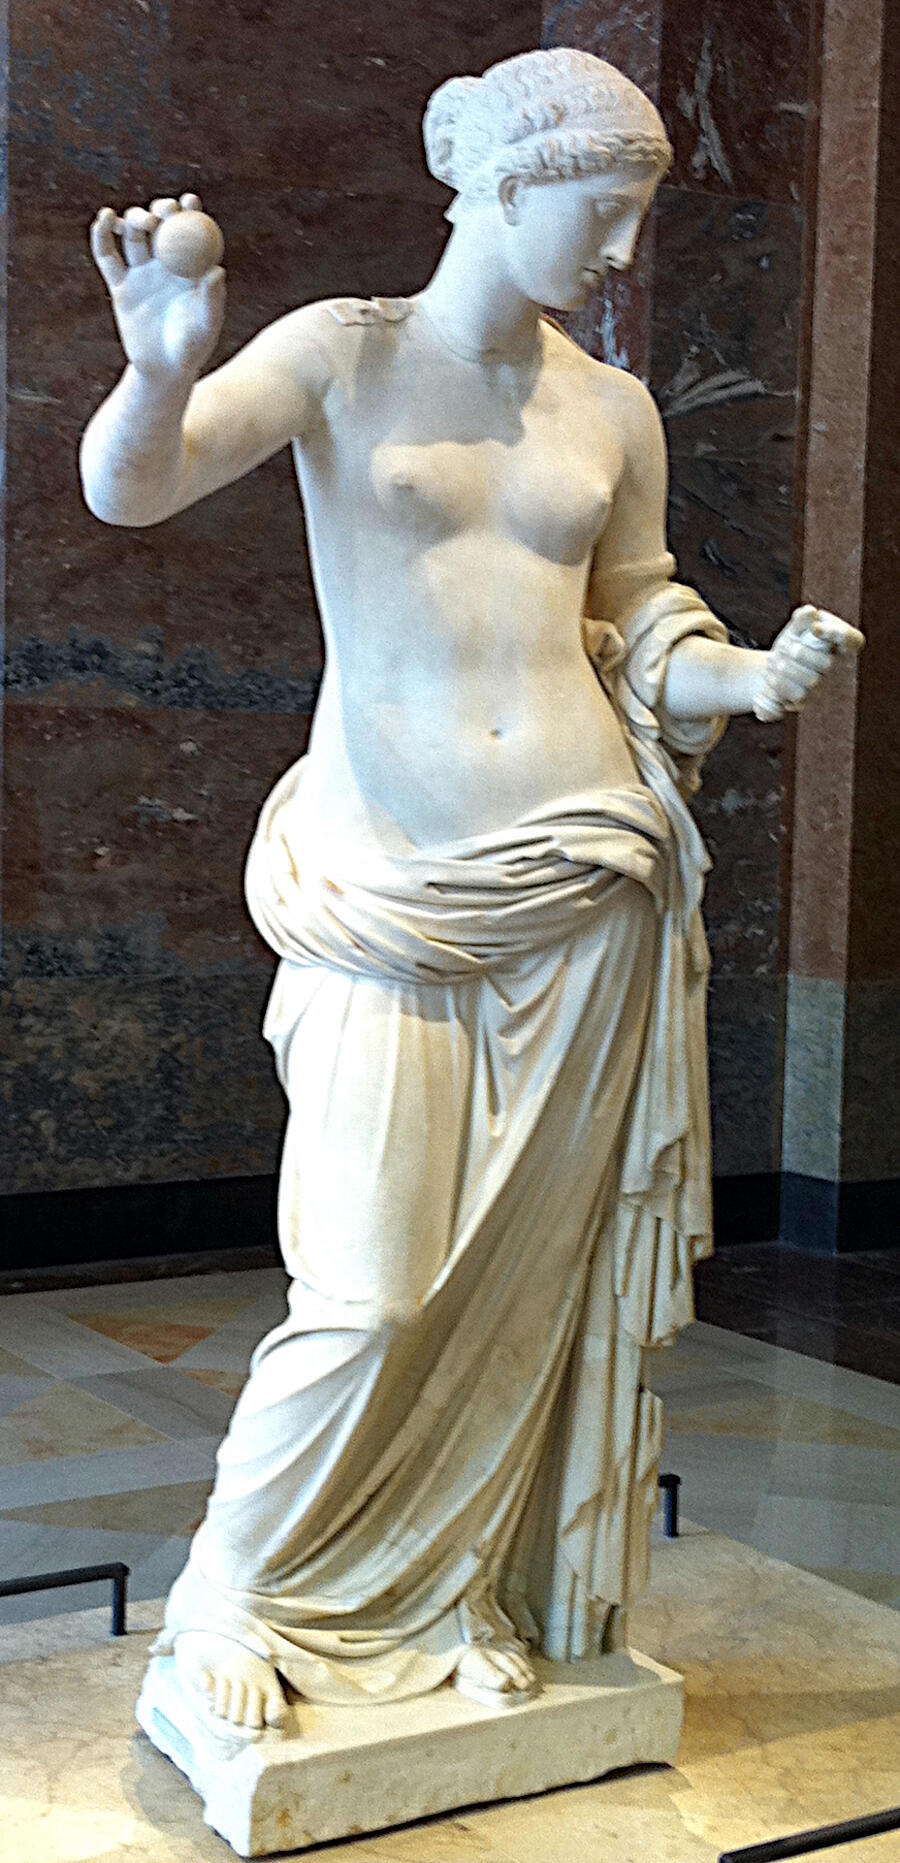 Arles Venus, the Louvre, Alain Darles / Wikimedia Commons CC BY